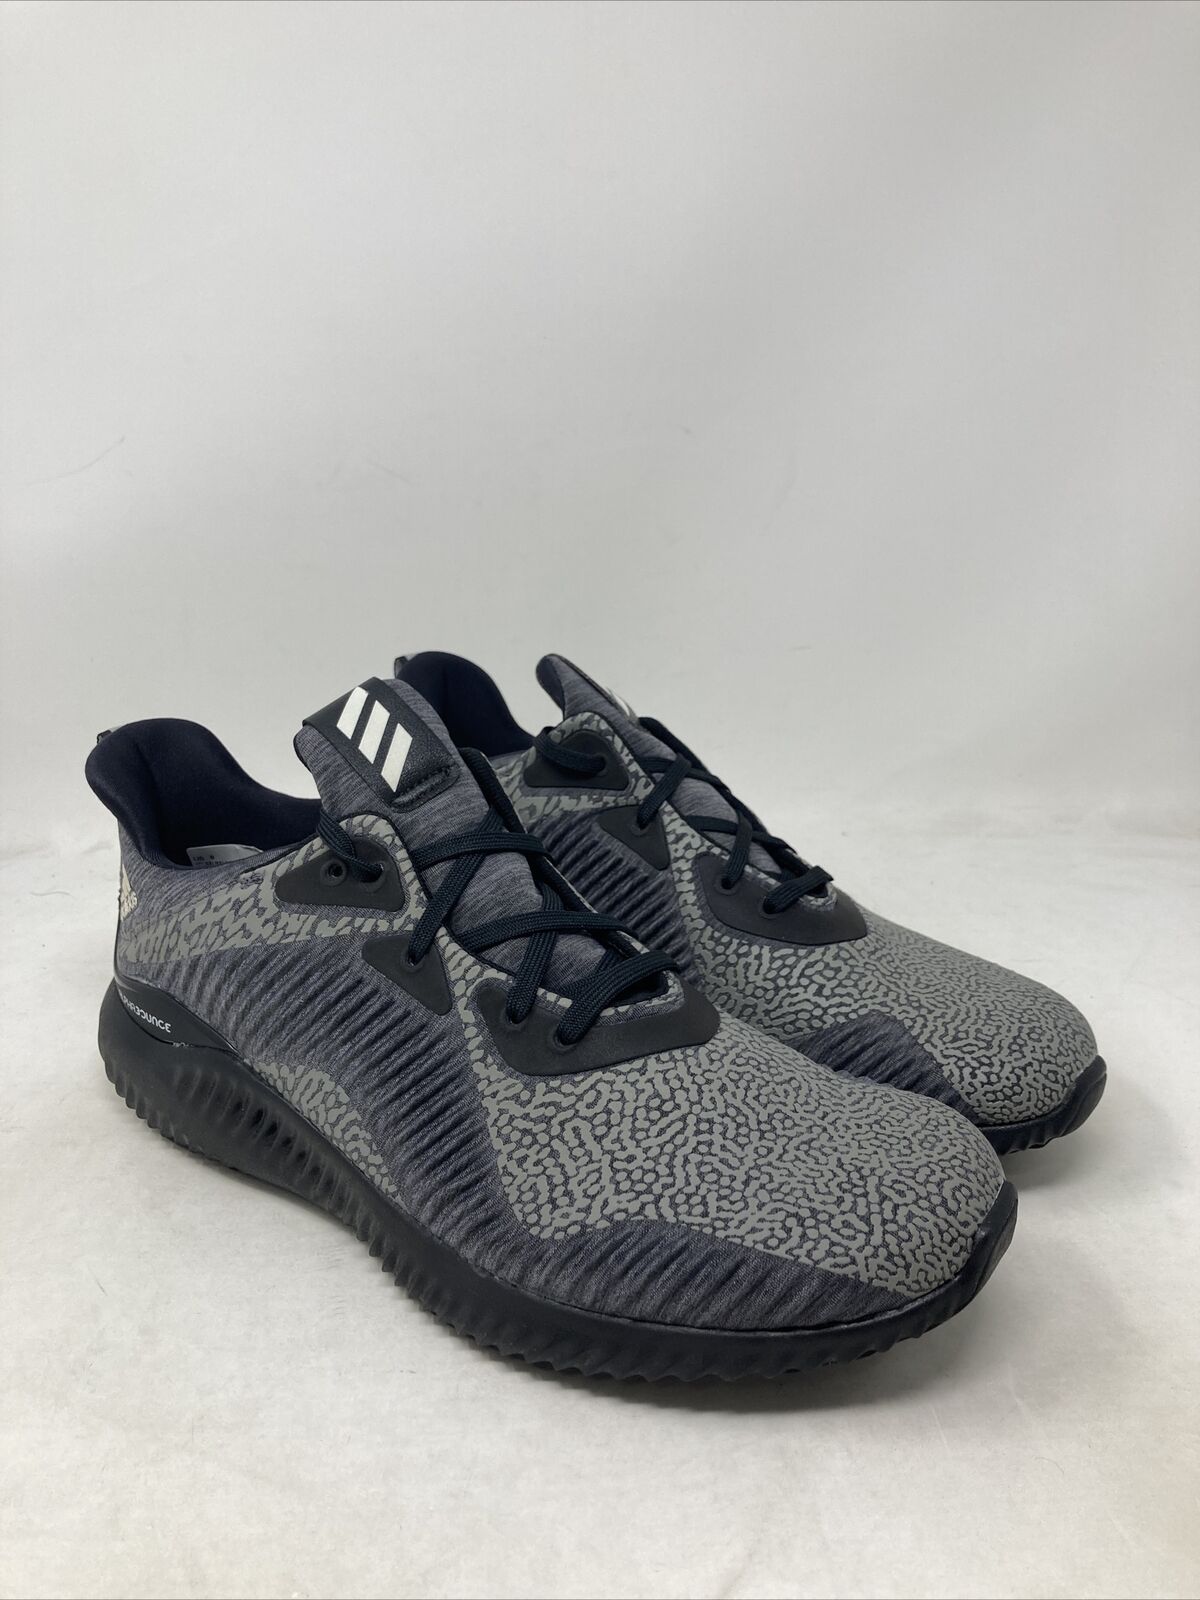 Adidas Men’s Alphabounce HPC AMS Running Shoes Size 9 M US Black